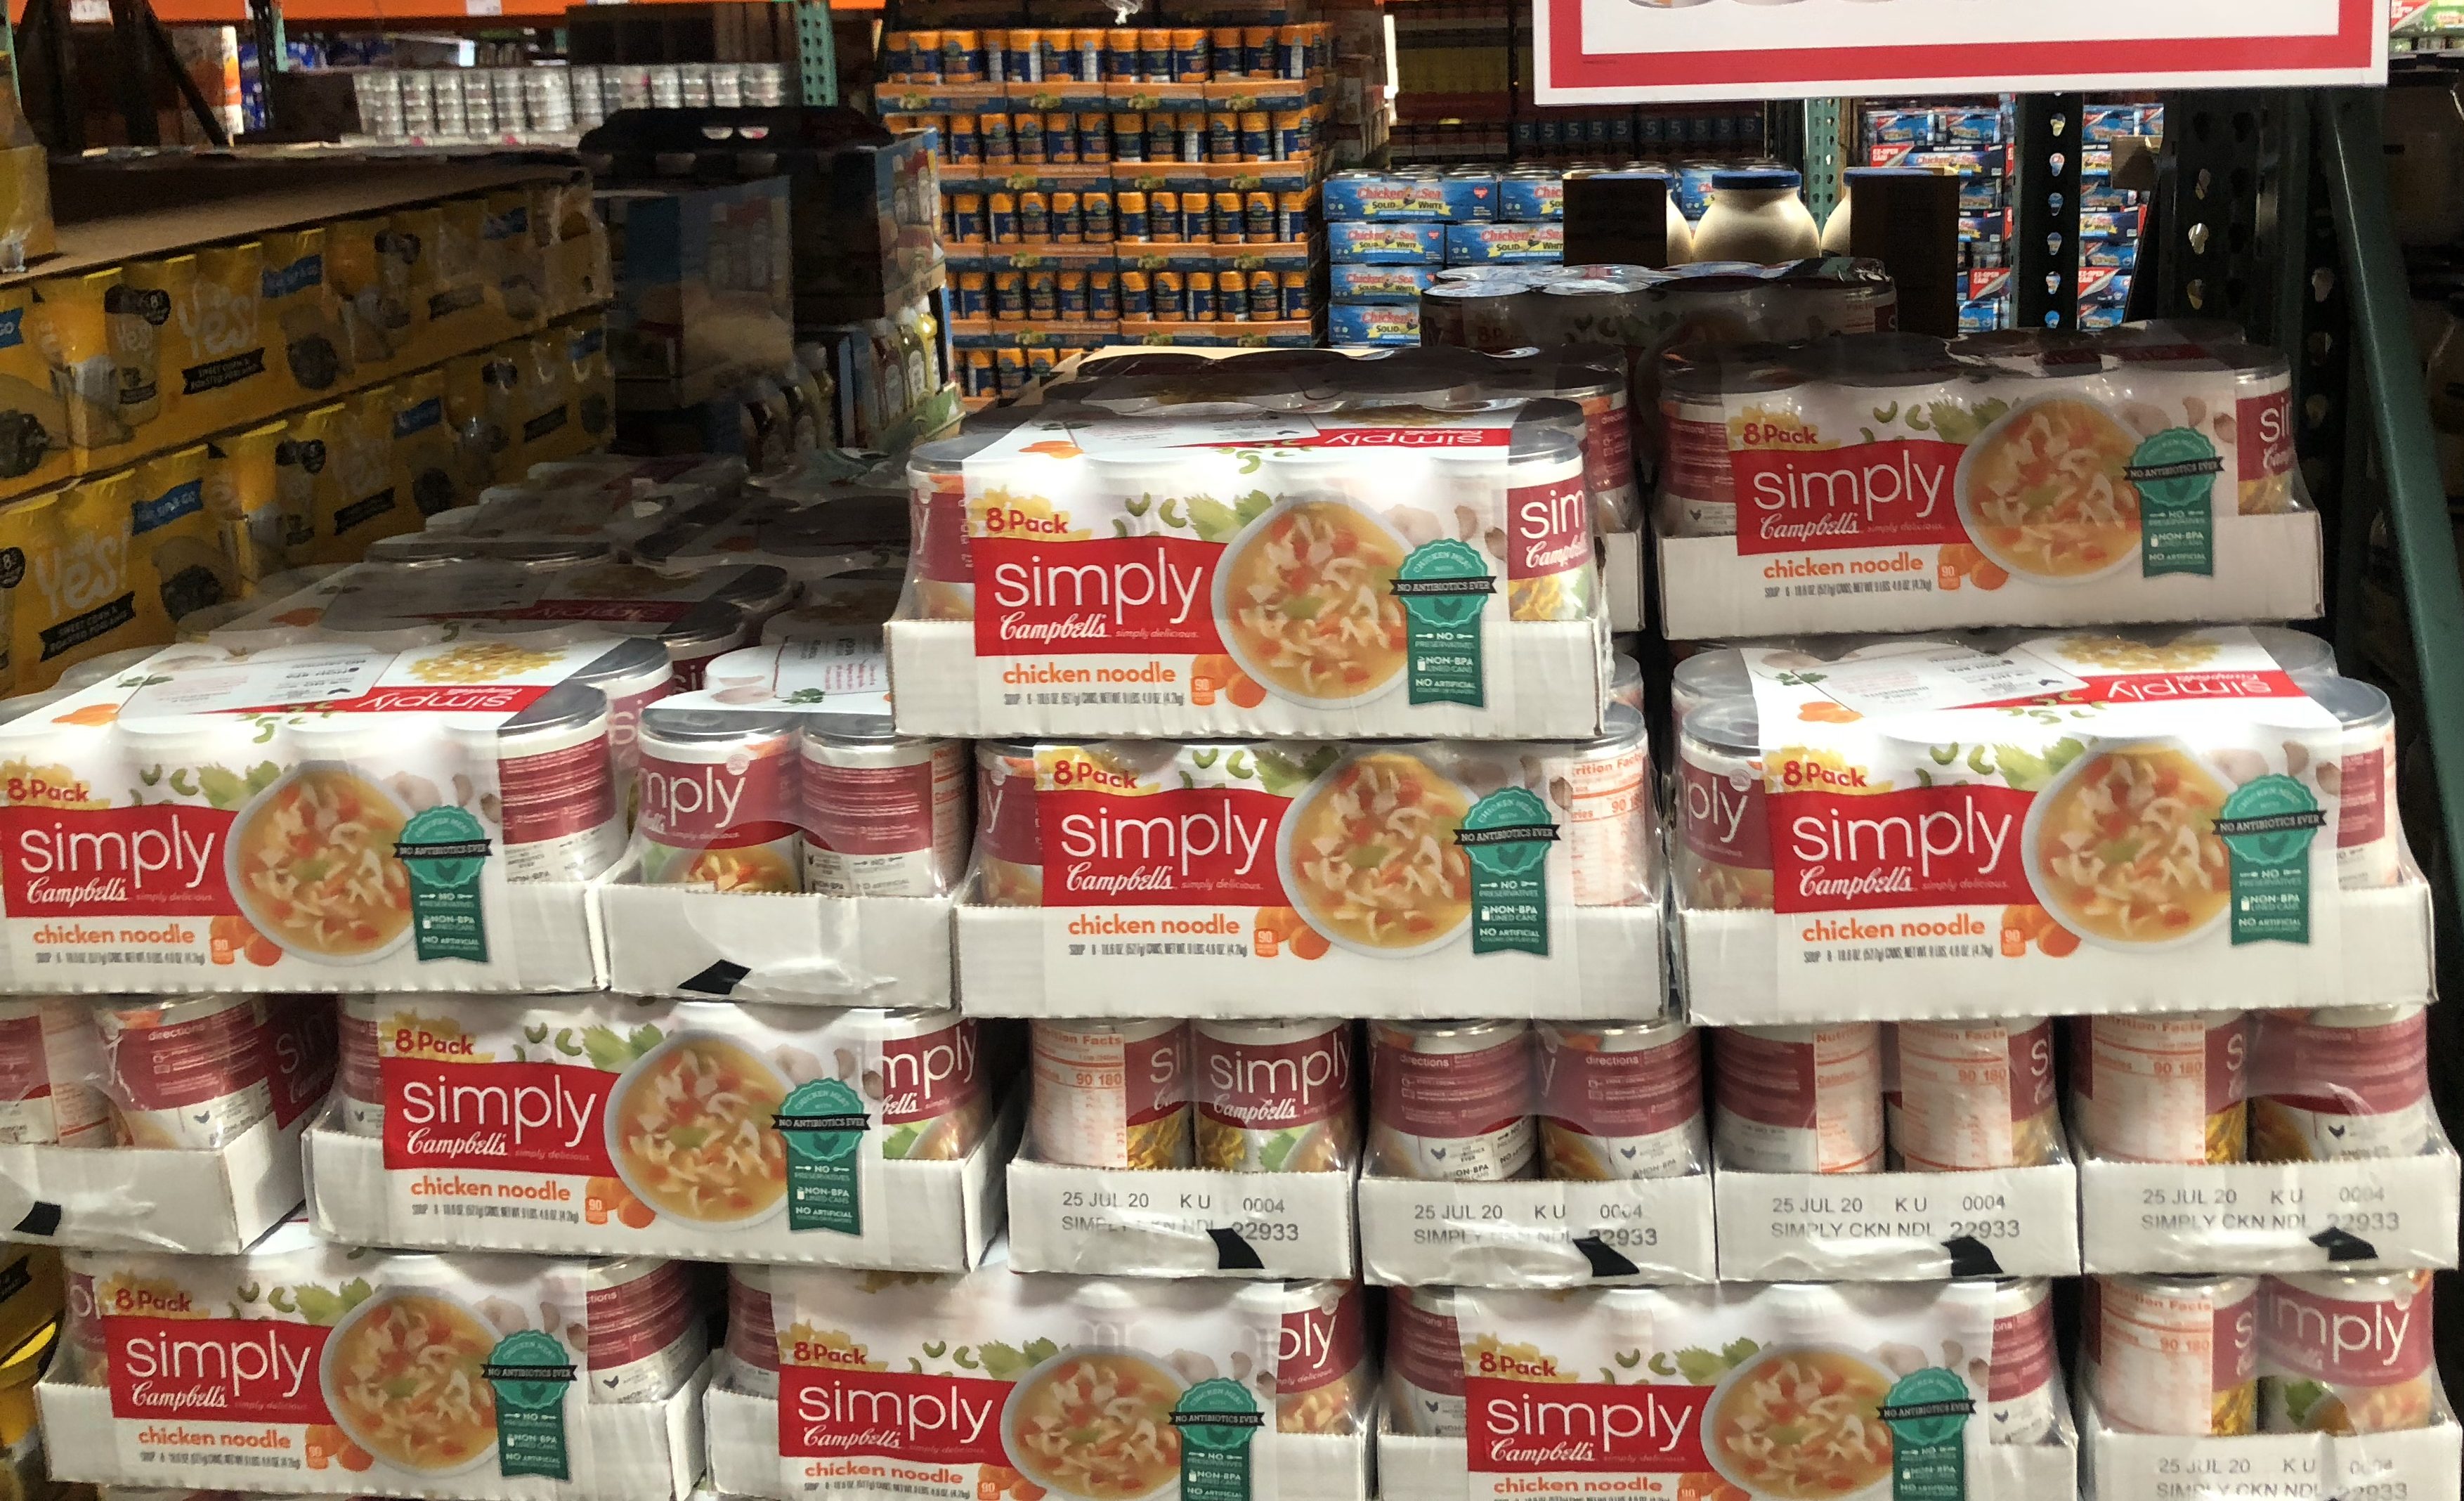 Costco deals October 2018 – Campbell's Simply soups at Costco